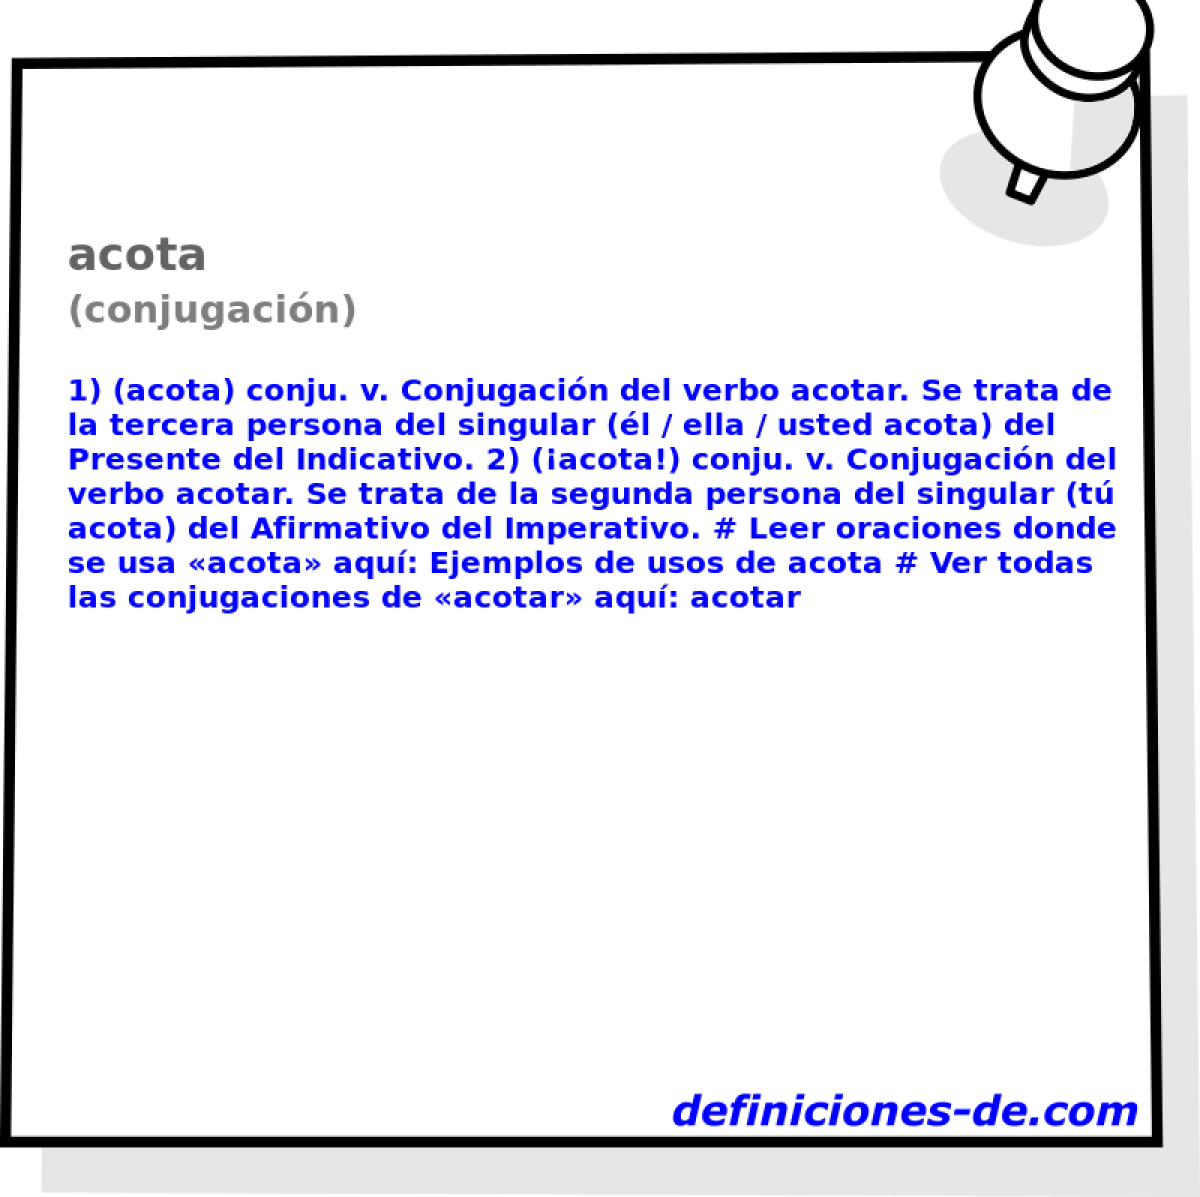 acota (conjugacin)